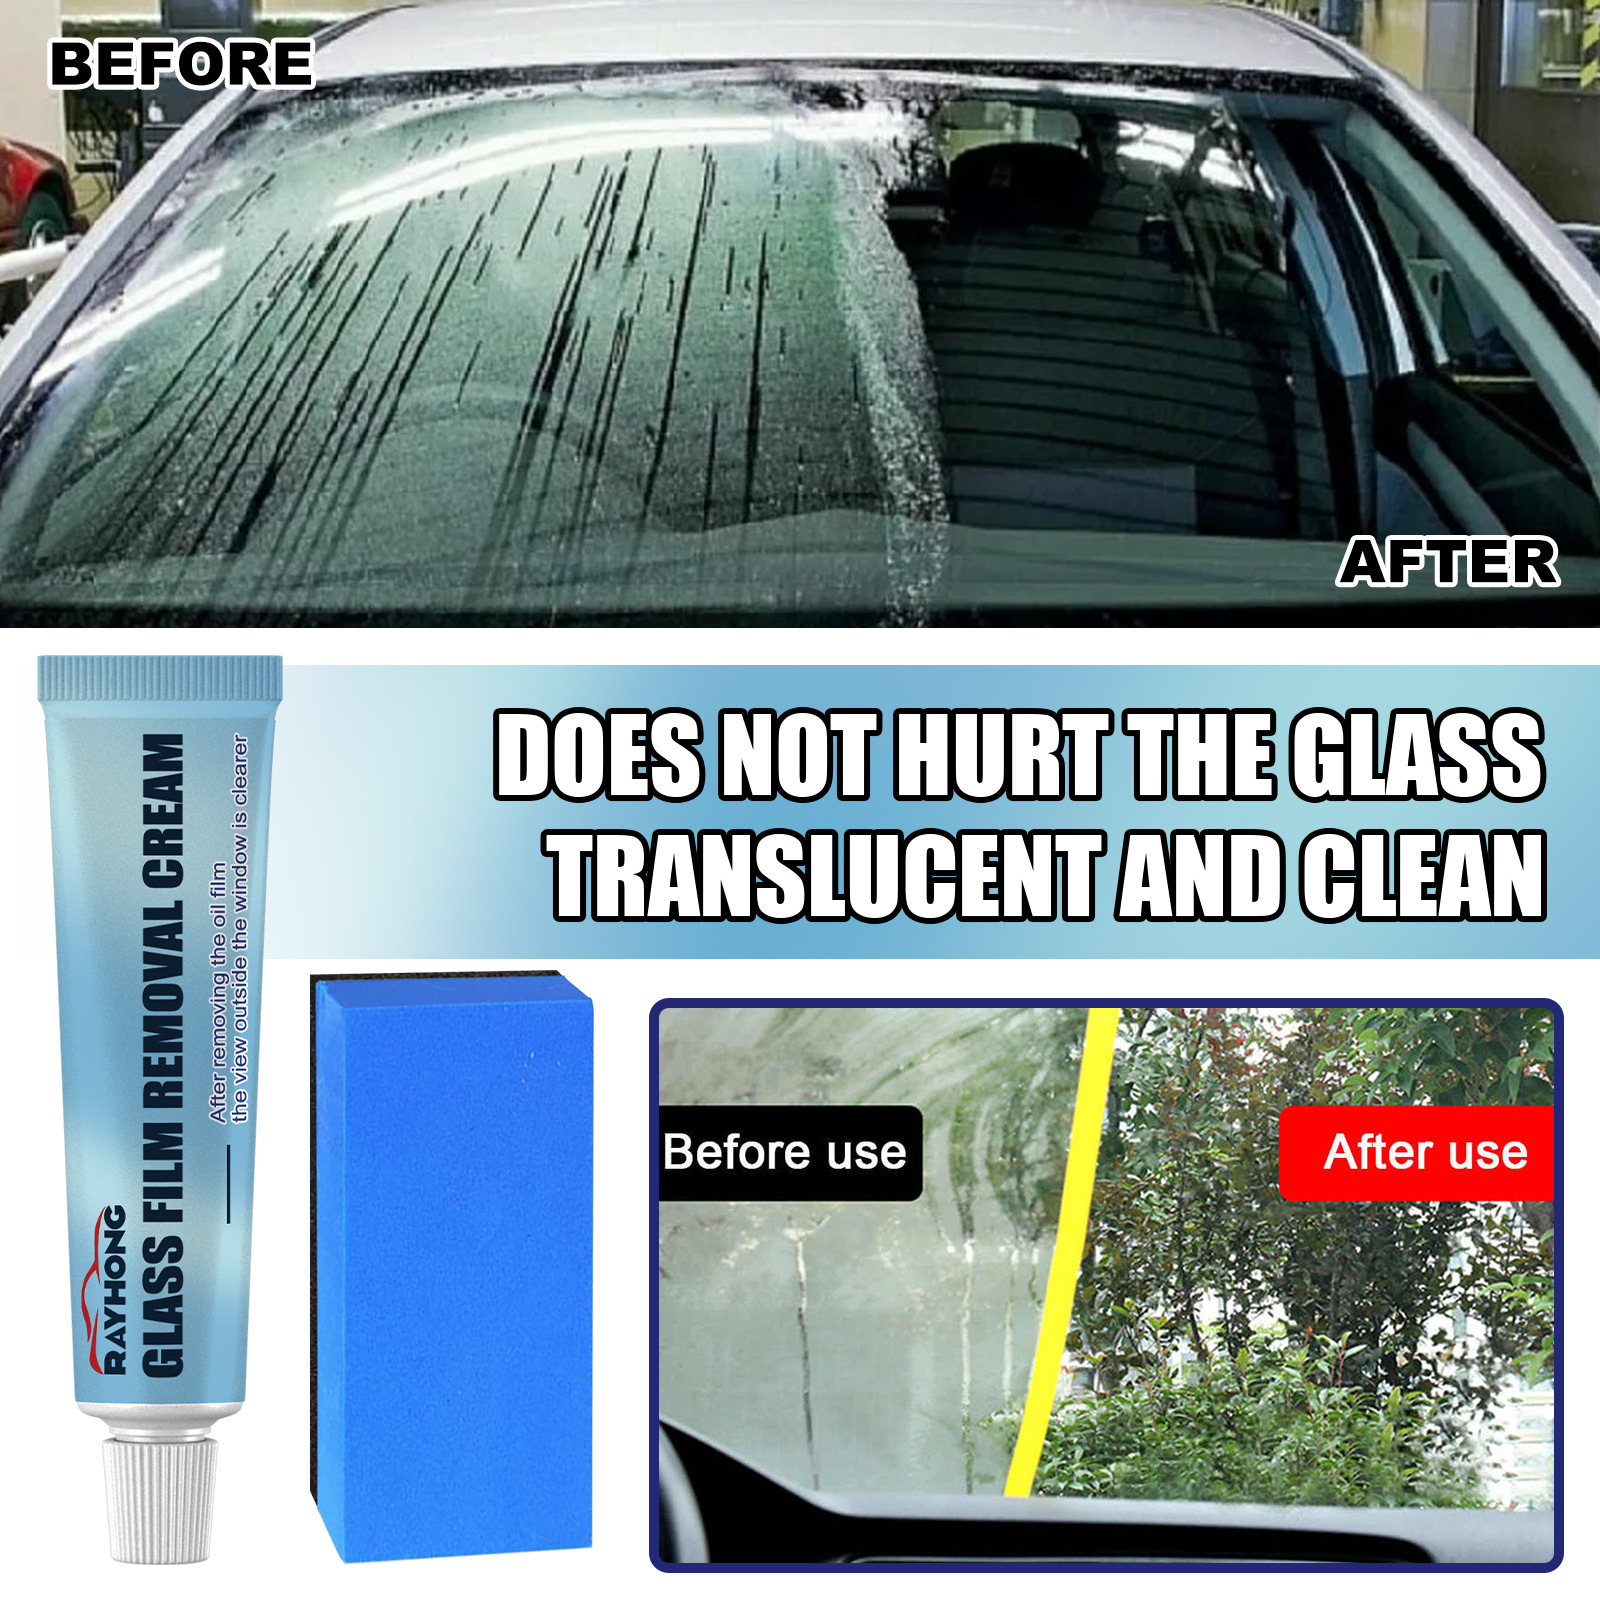 free sample #901 car glass oil